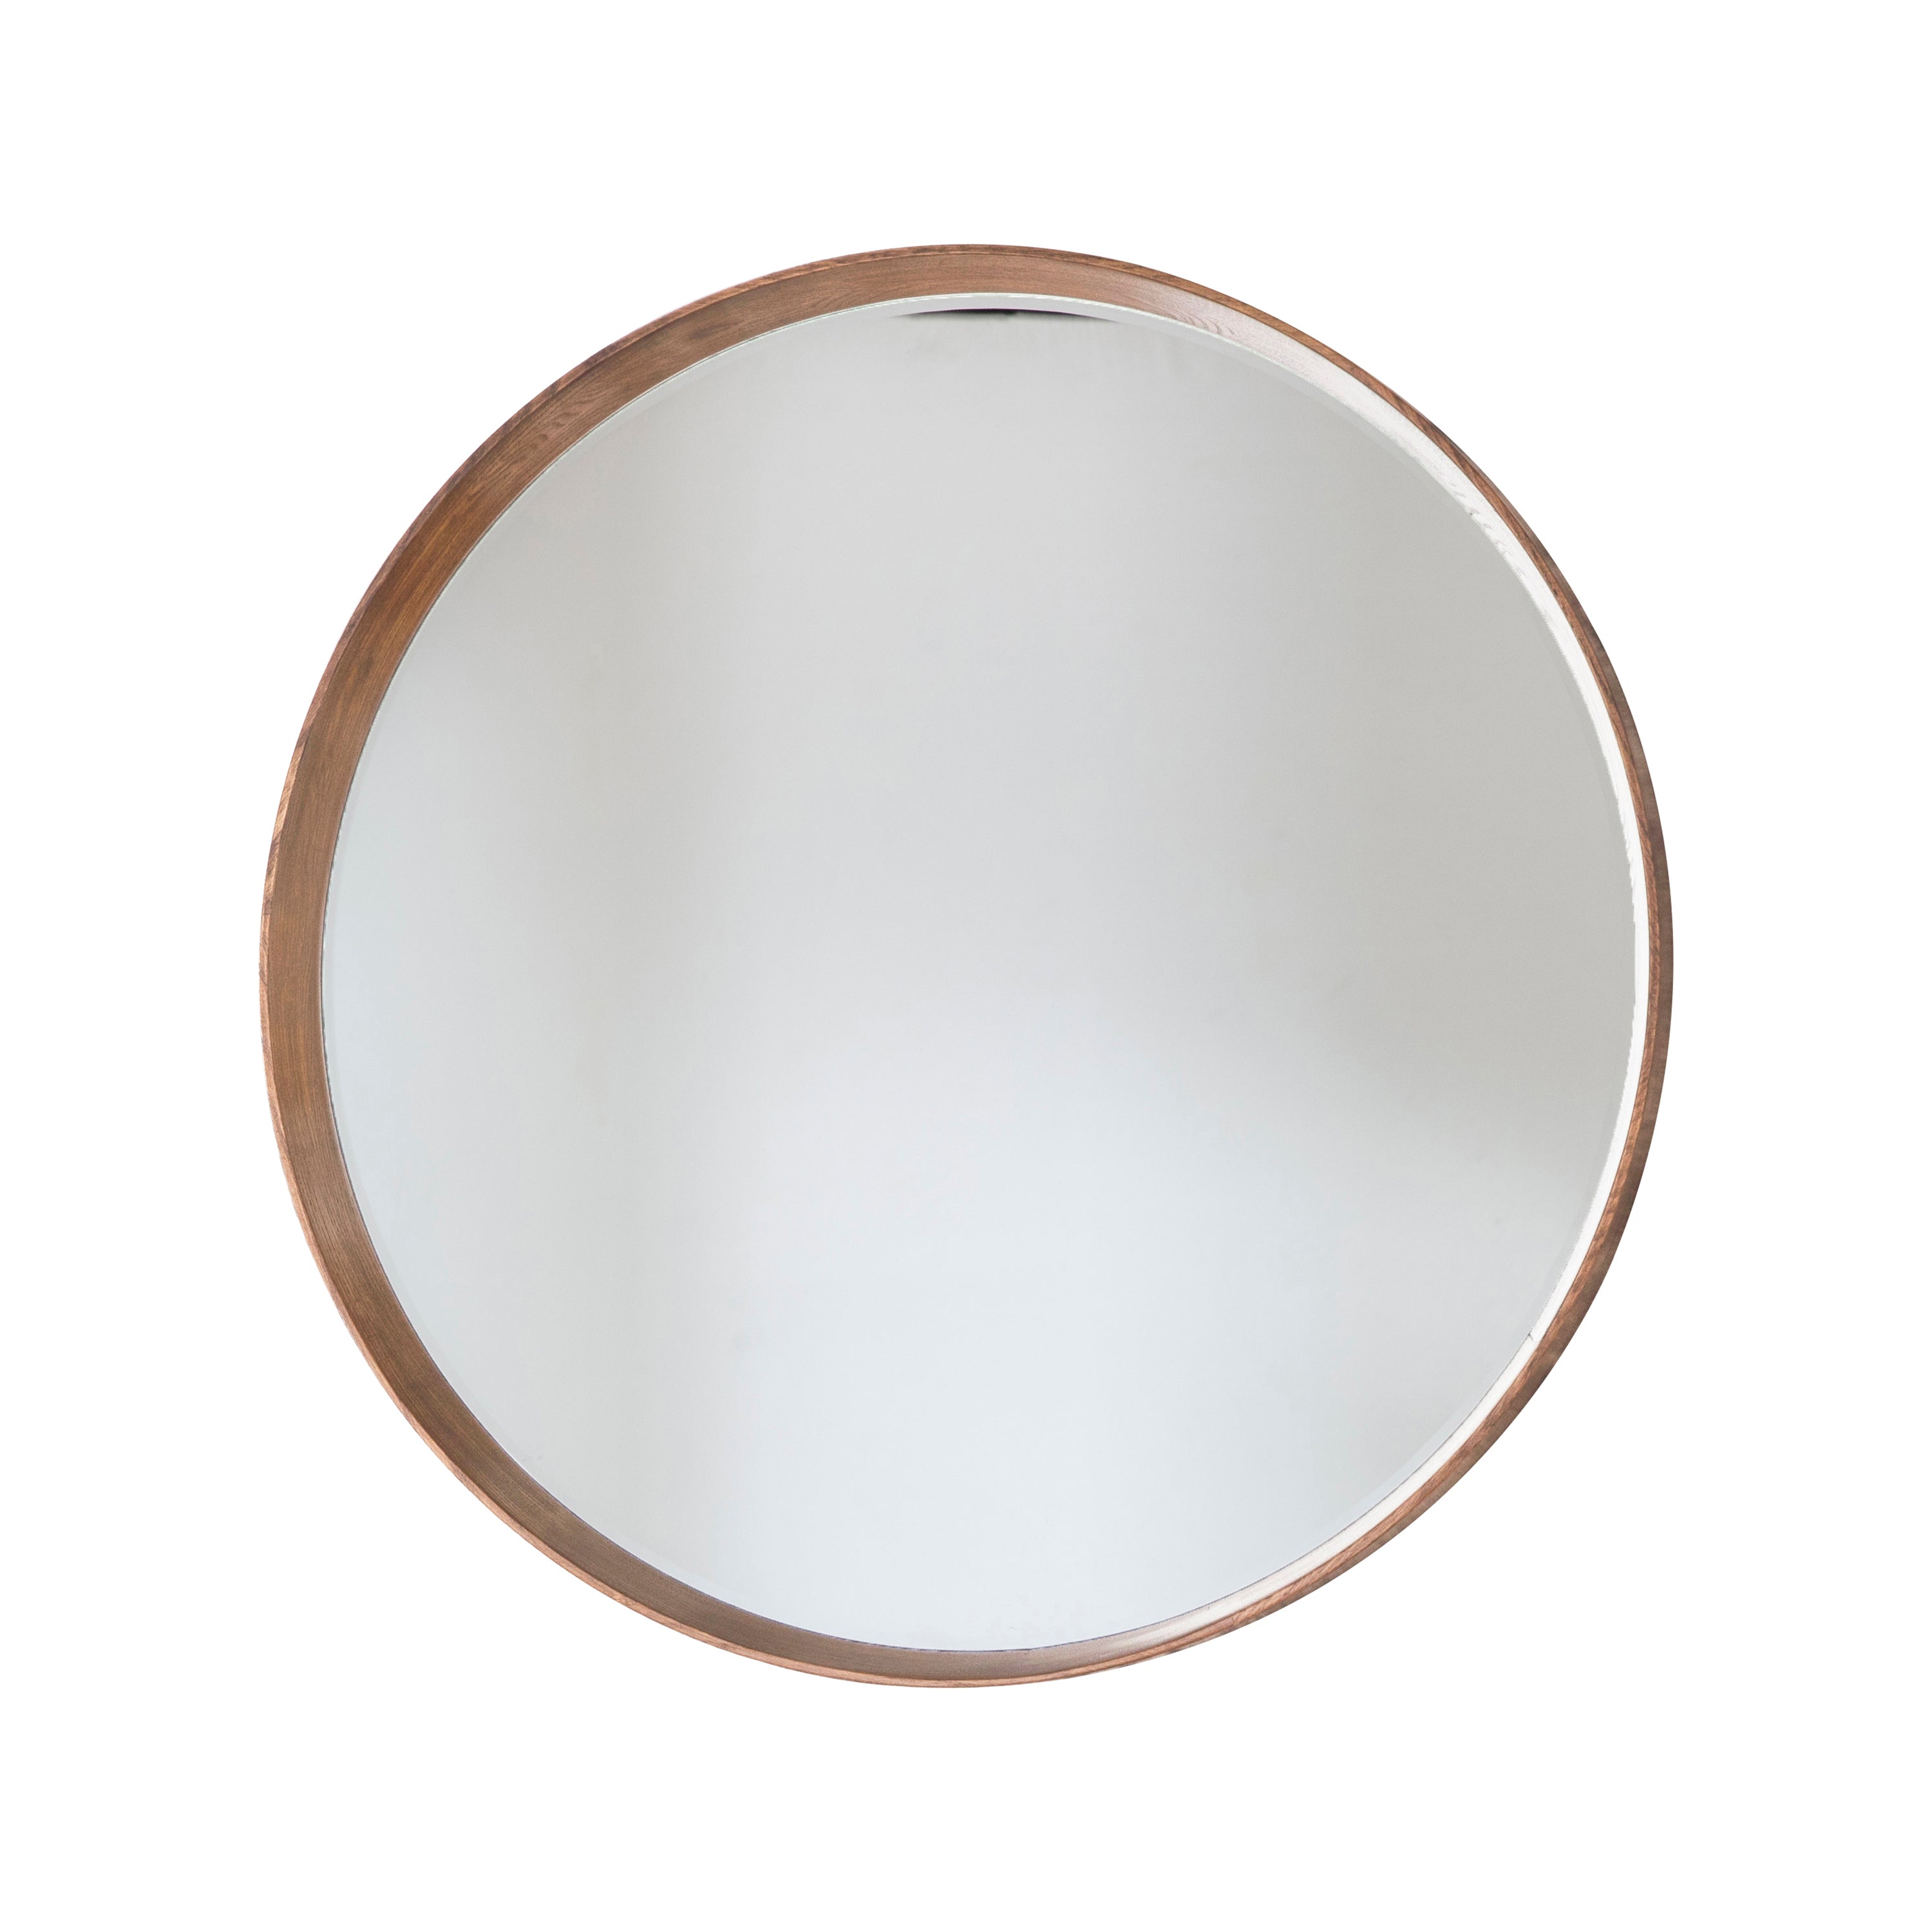 Keats Round Mirror Oak 73 cm